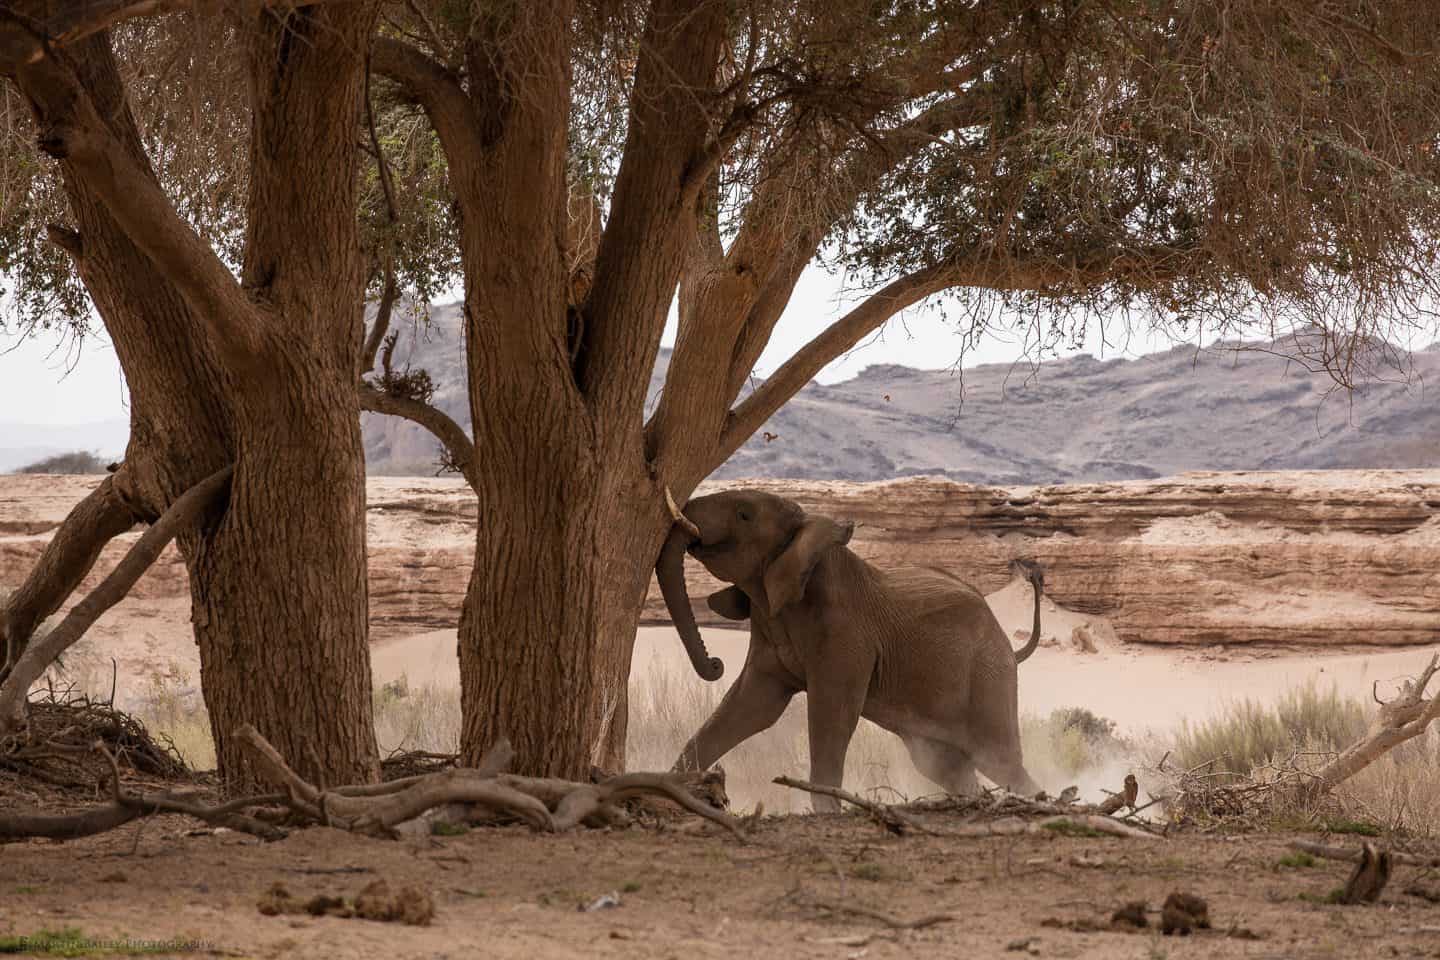 Desert Elephant Shanking an Ana Tree